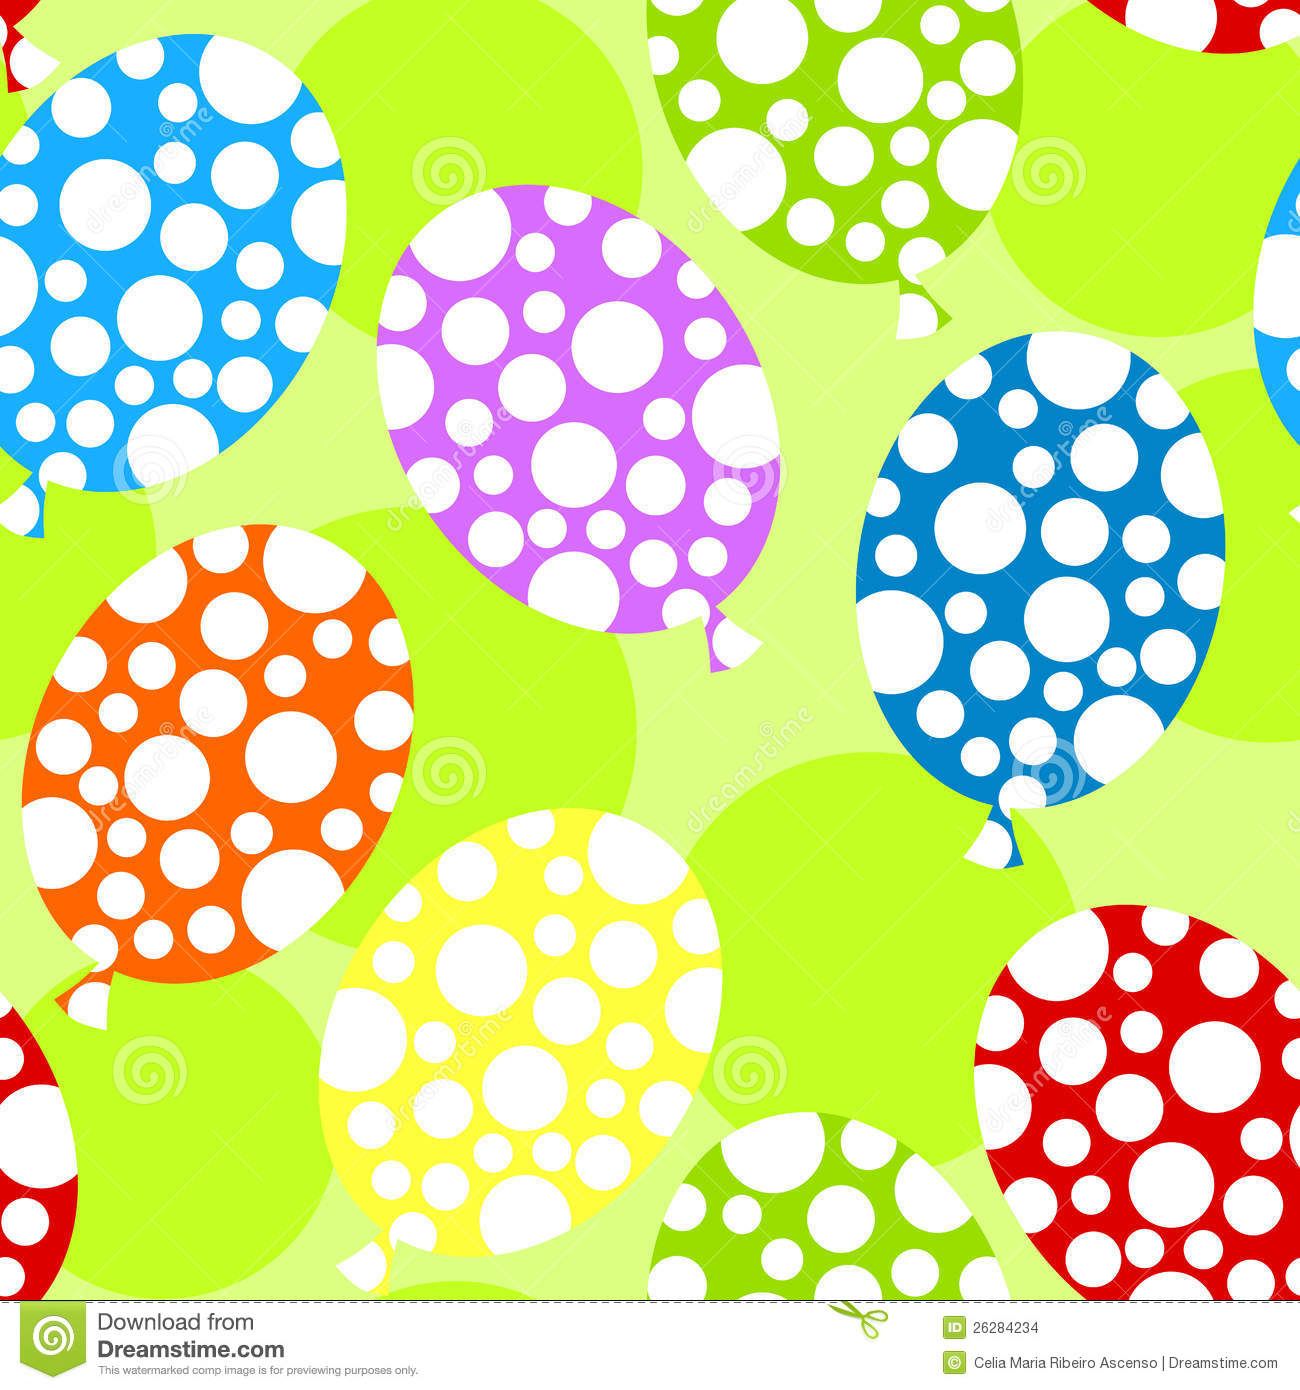 More Similar Stock Images Of   Polka Dot Balloons Seamless Background